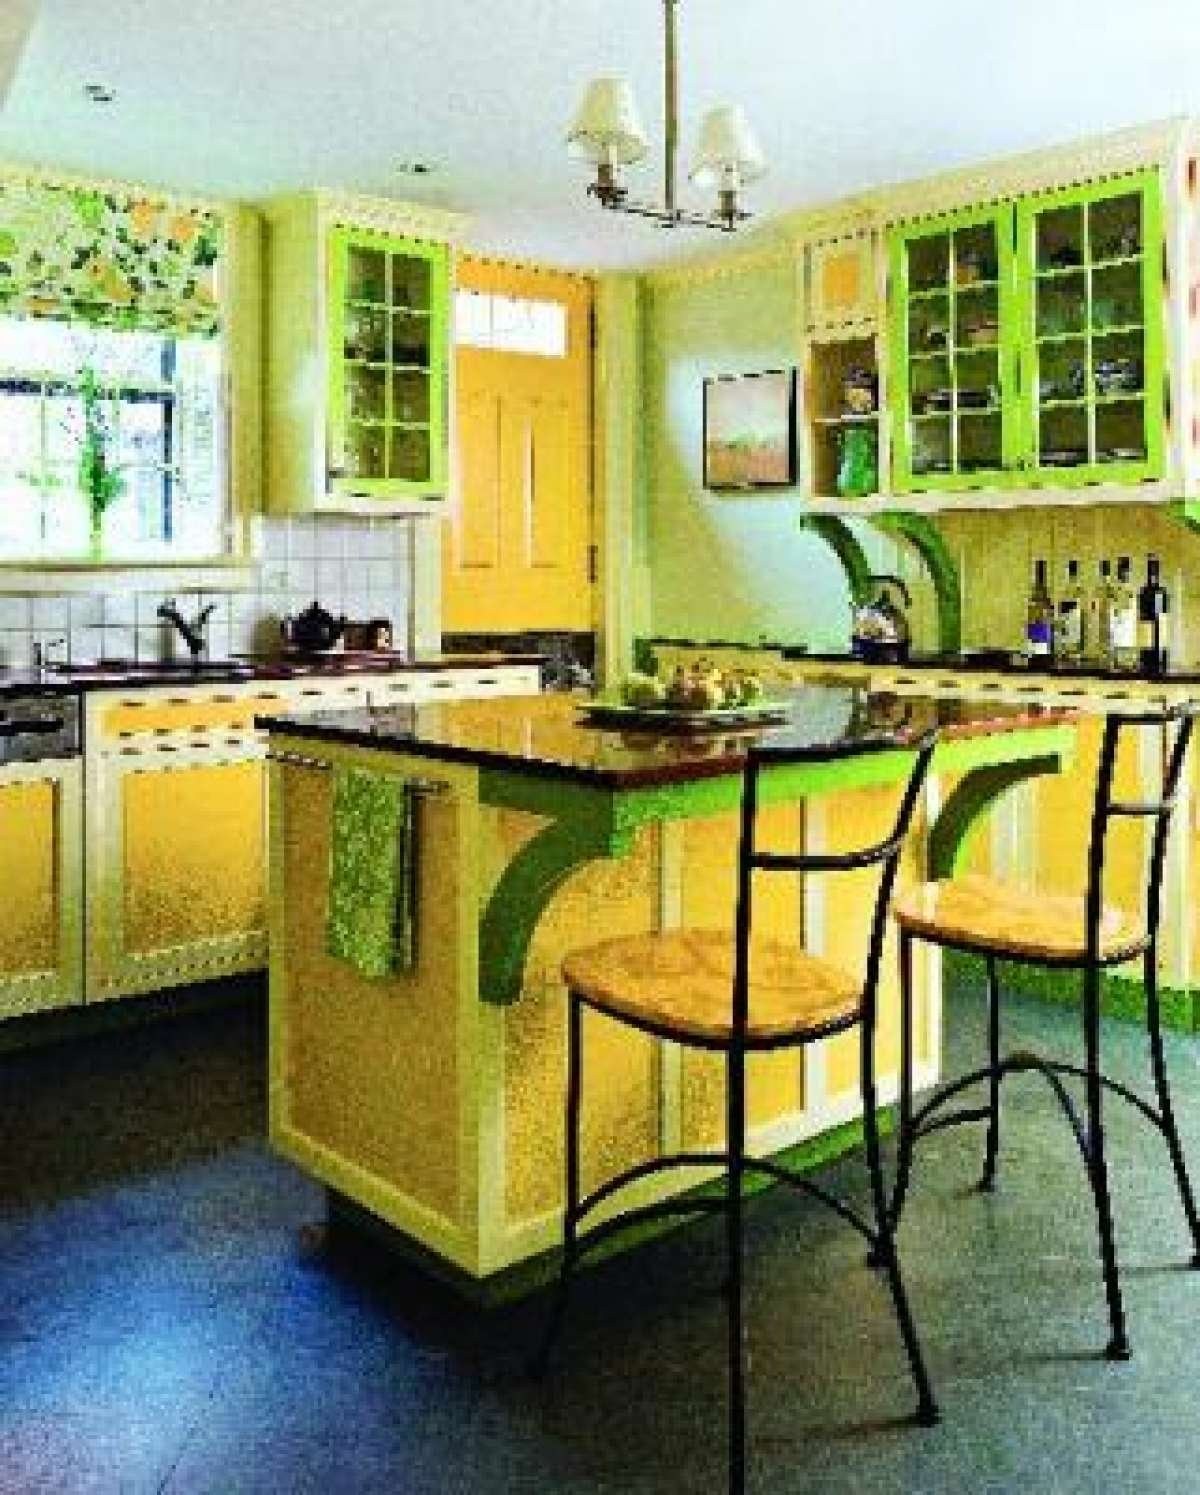 Желто зеленая кухня. Кухня в желто зеленом цвете. Кухня в зеленых тонах. Кухня с зелеными стенами.